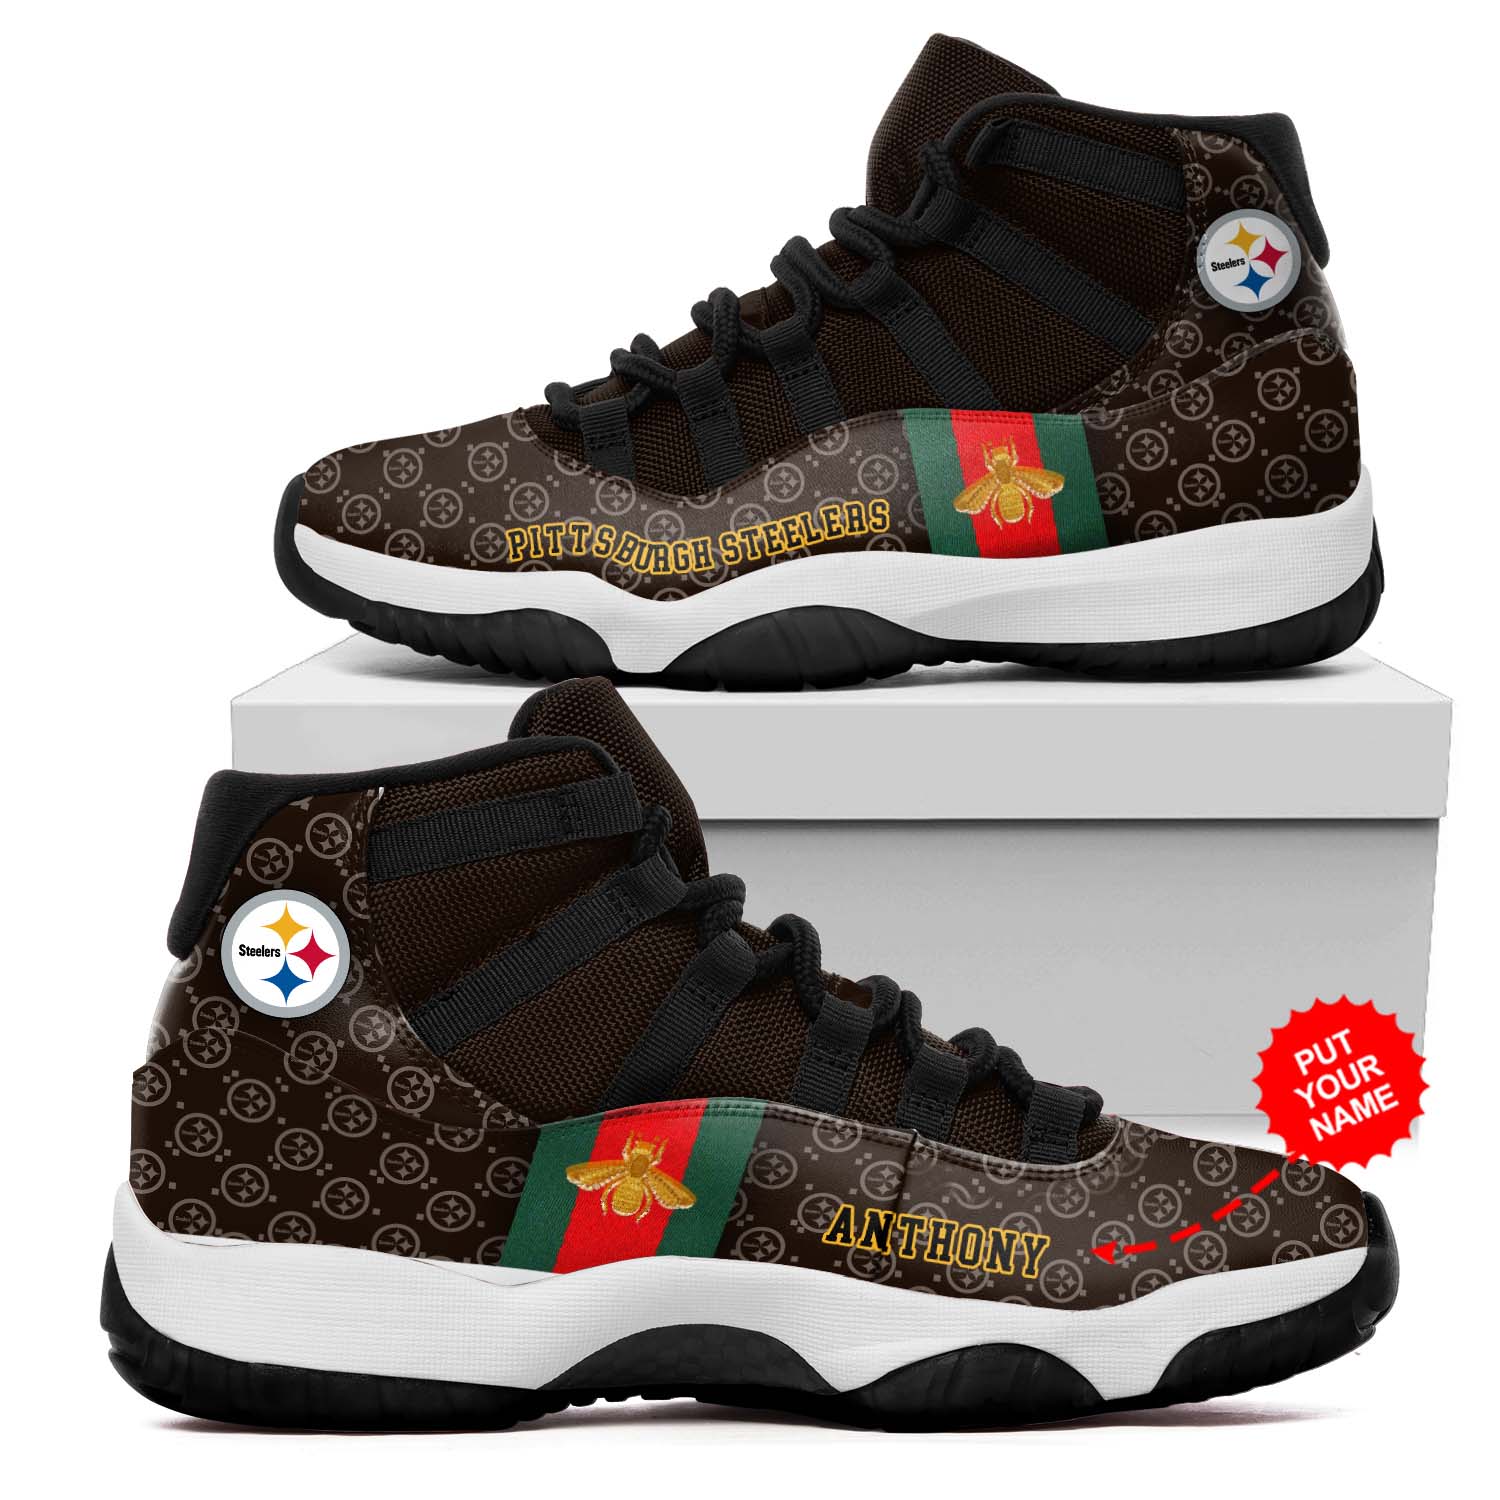 Pittsburgh Steelers NFL Gucci Air Jordan 11 Shoes